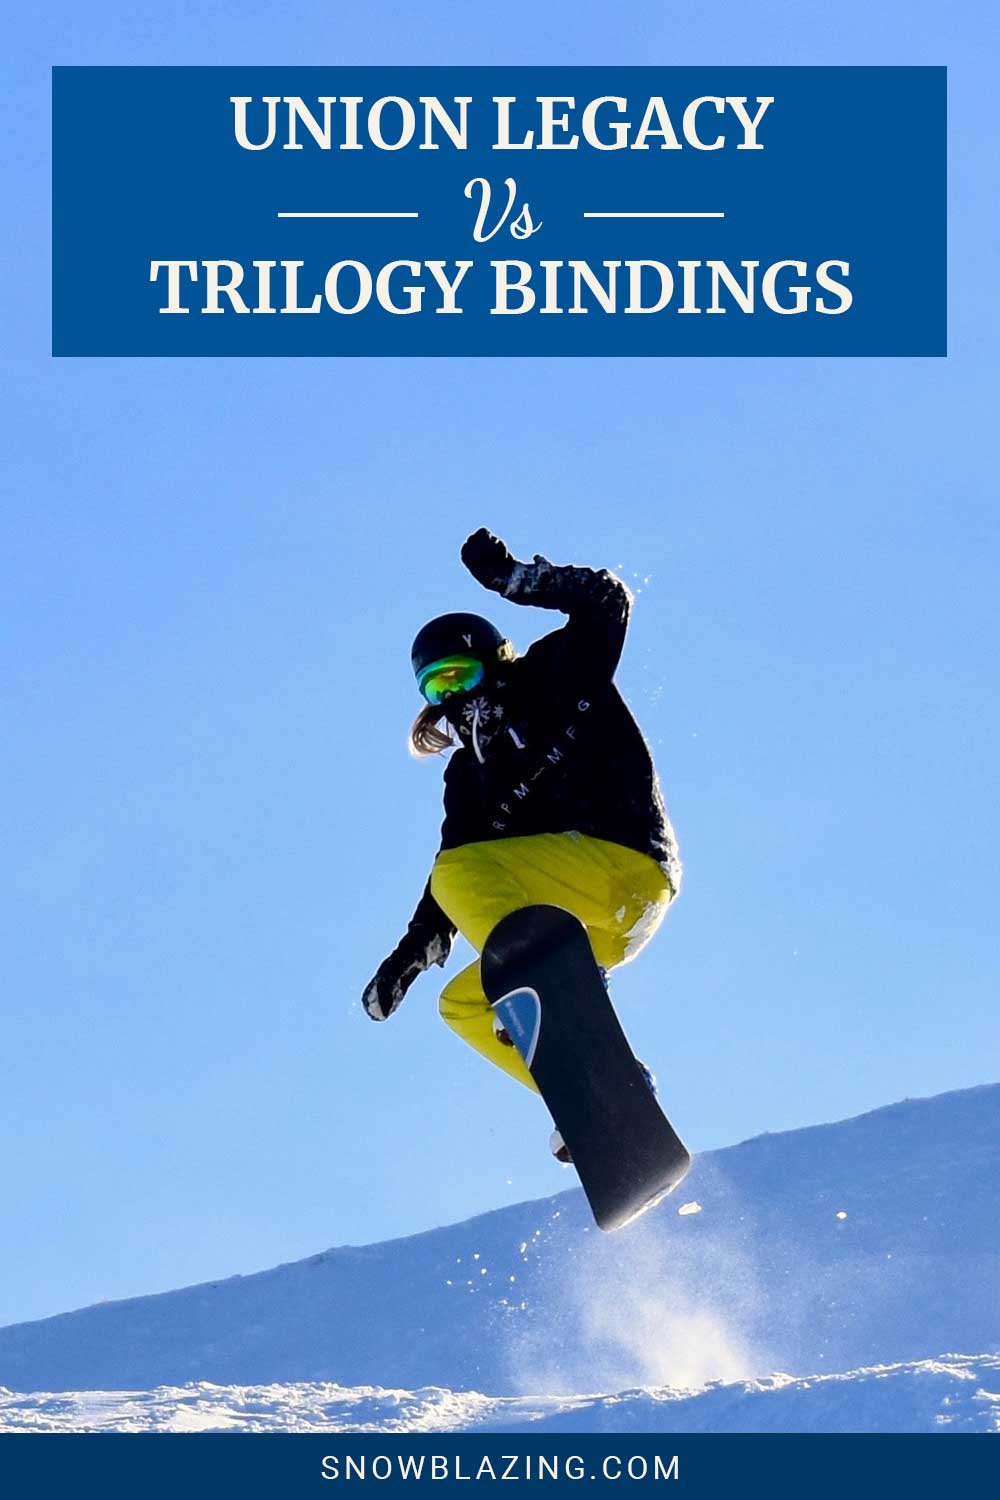 Person wearing yellow pants snowboarding - Union Legacy vs. Trilogy Bindings.